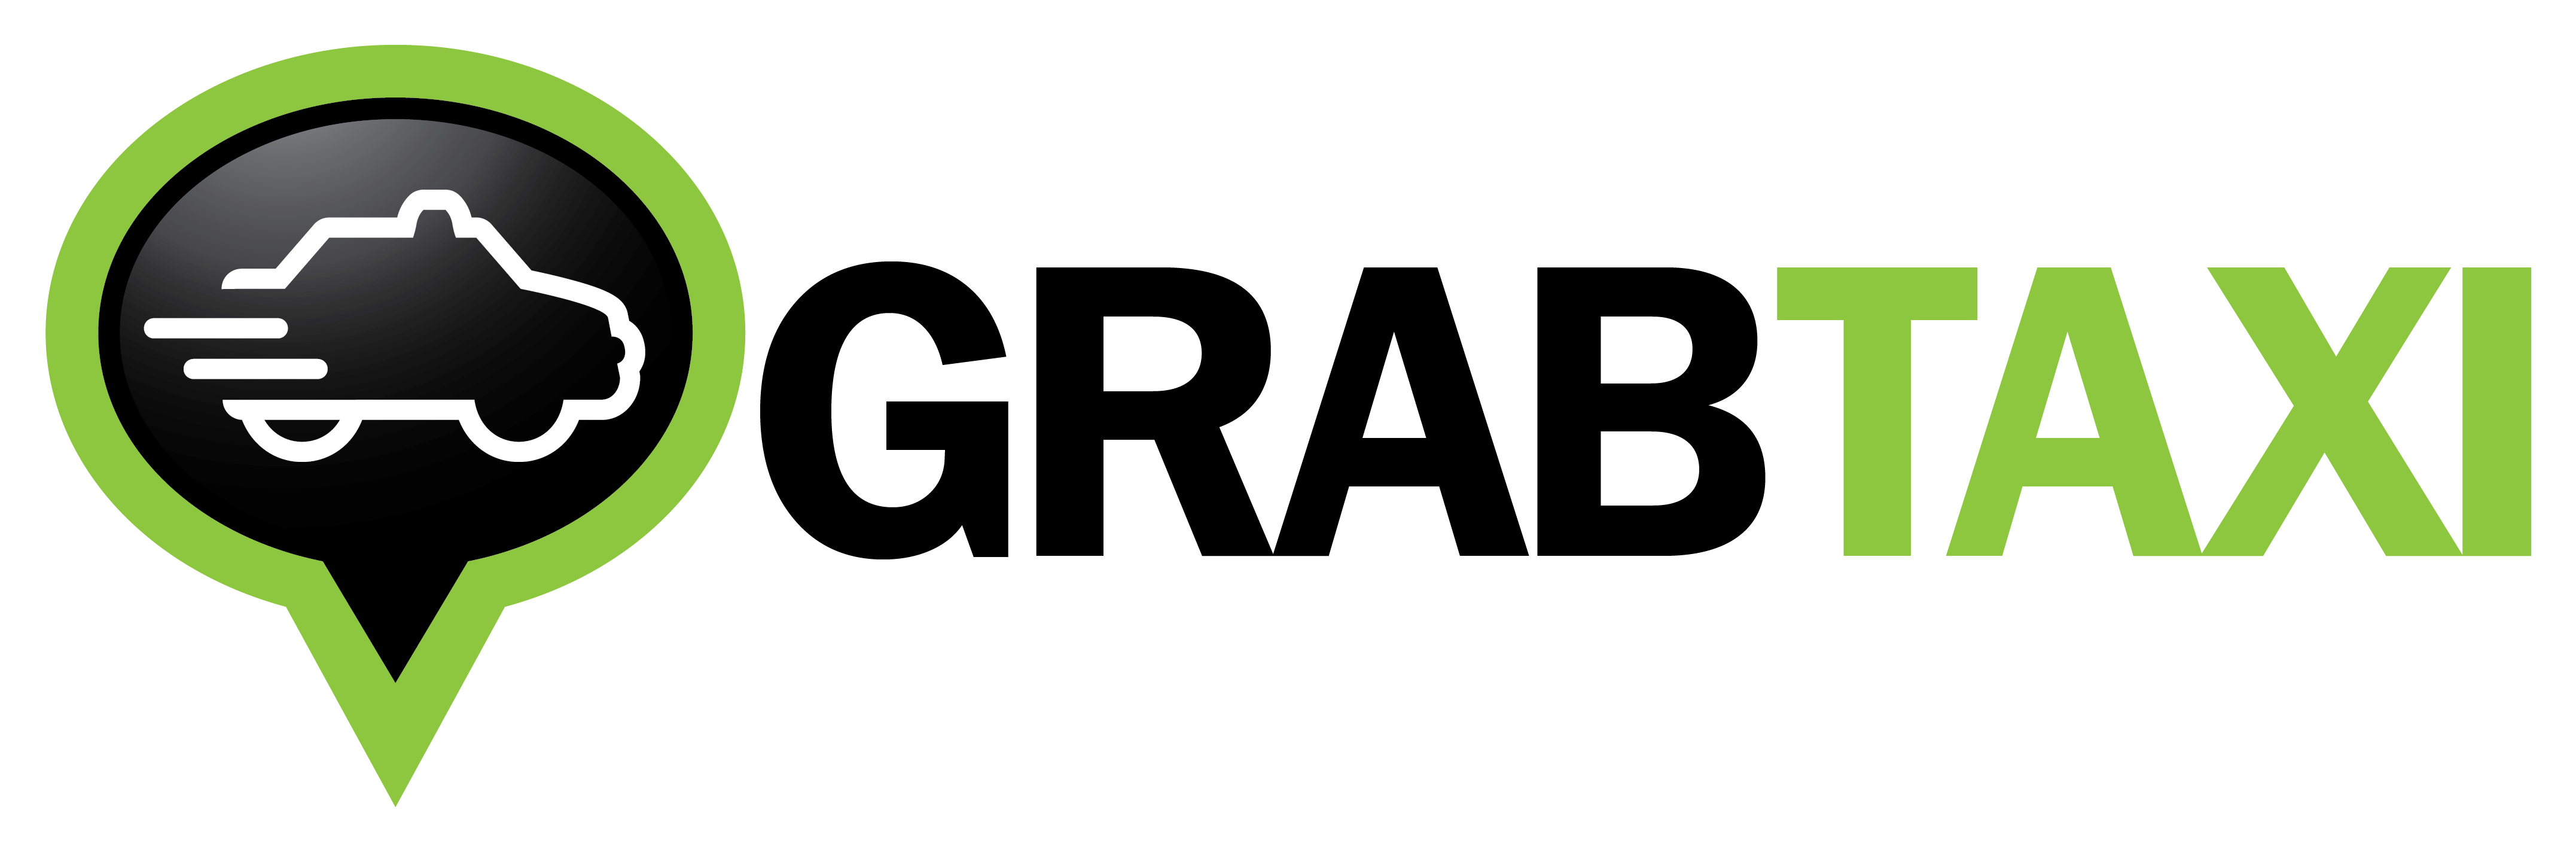 Grab Bike Logo - Is Bitcoin Integration Key? Go Jek And GrabBike Rivarly In Jakarta